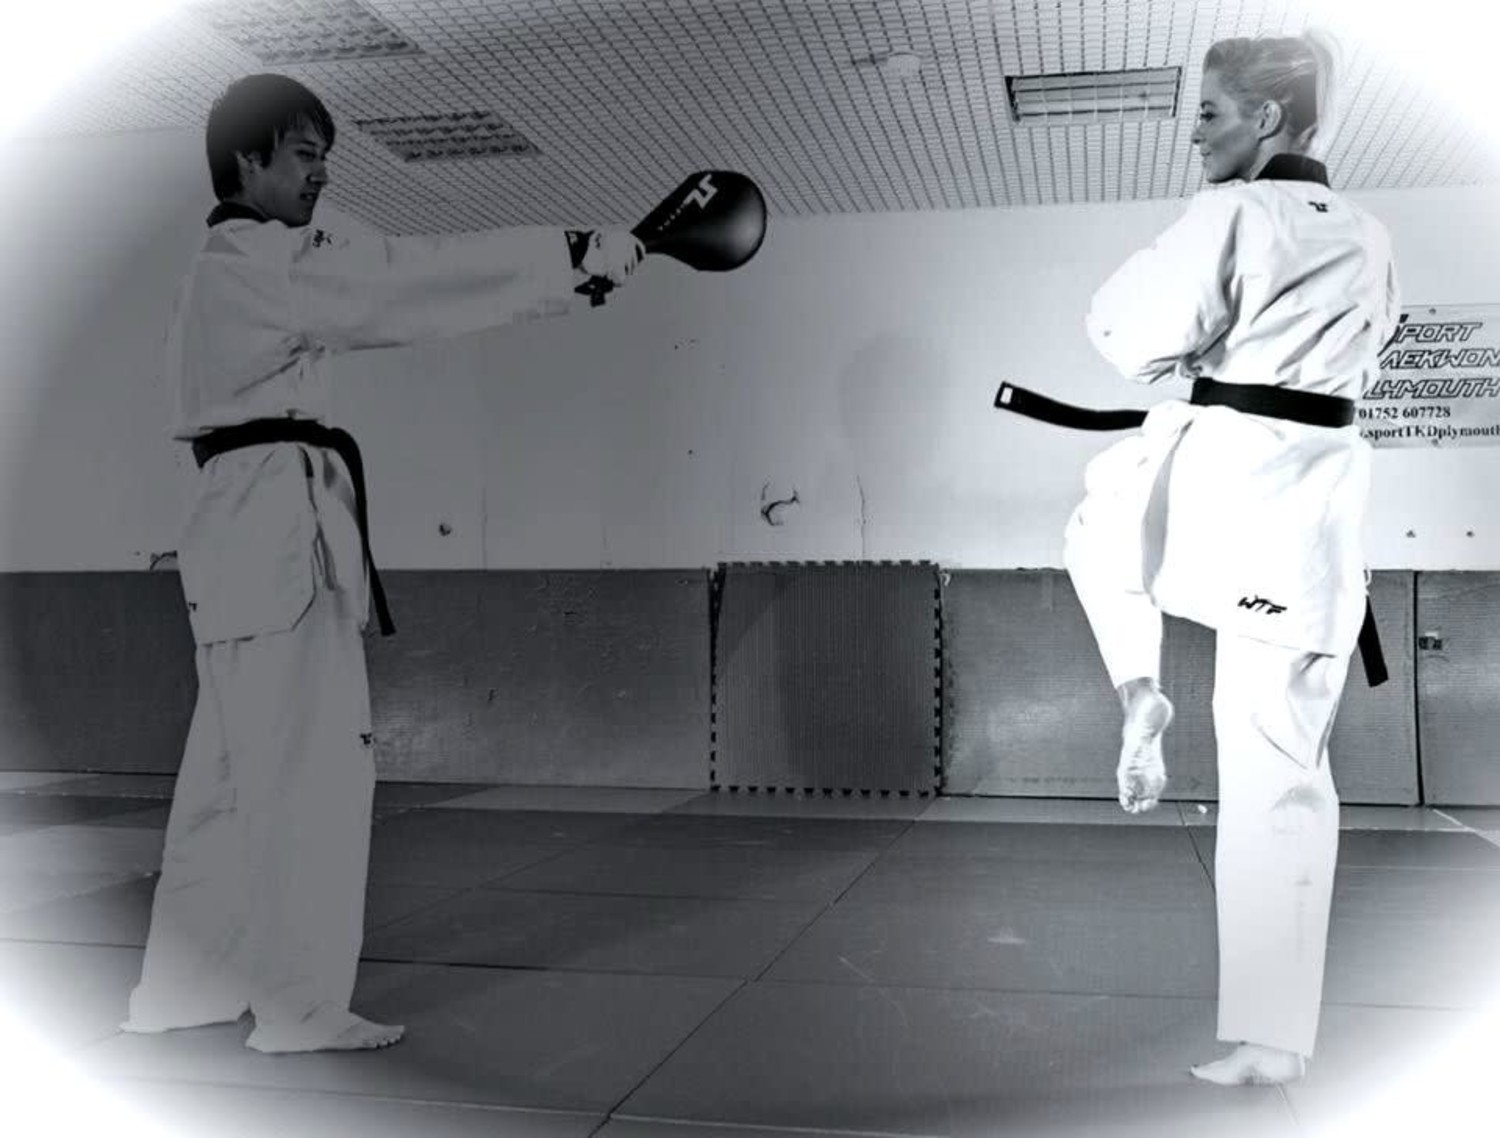 tae kwon do - Why doesn't Muay Thai use the Karate/Taekwondo front